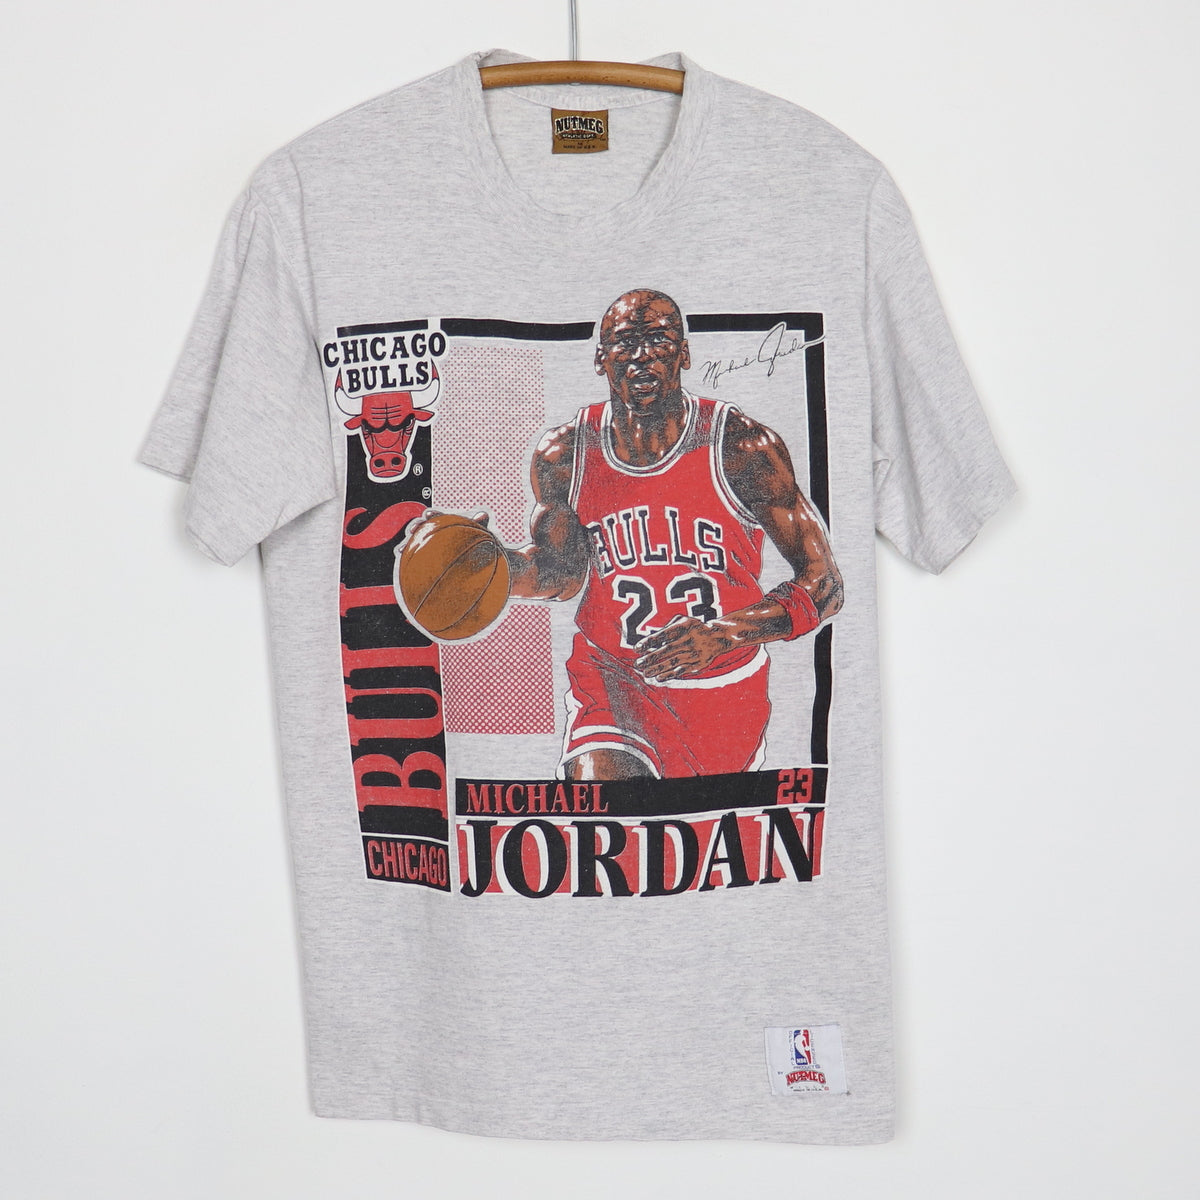 Wyco Vintage 1991 Michael Jordan Chicago Bulls NBA Starter Shirt